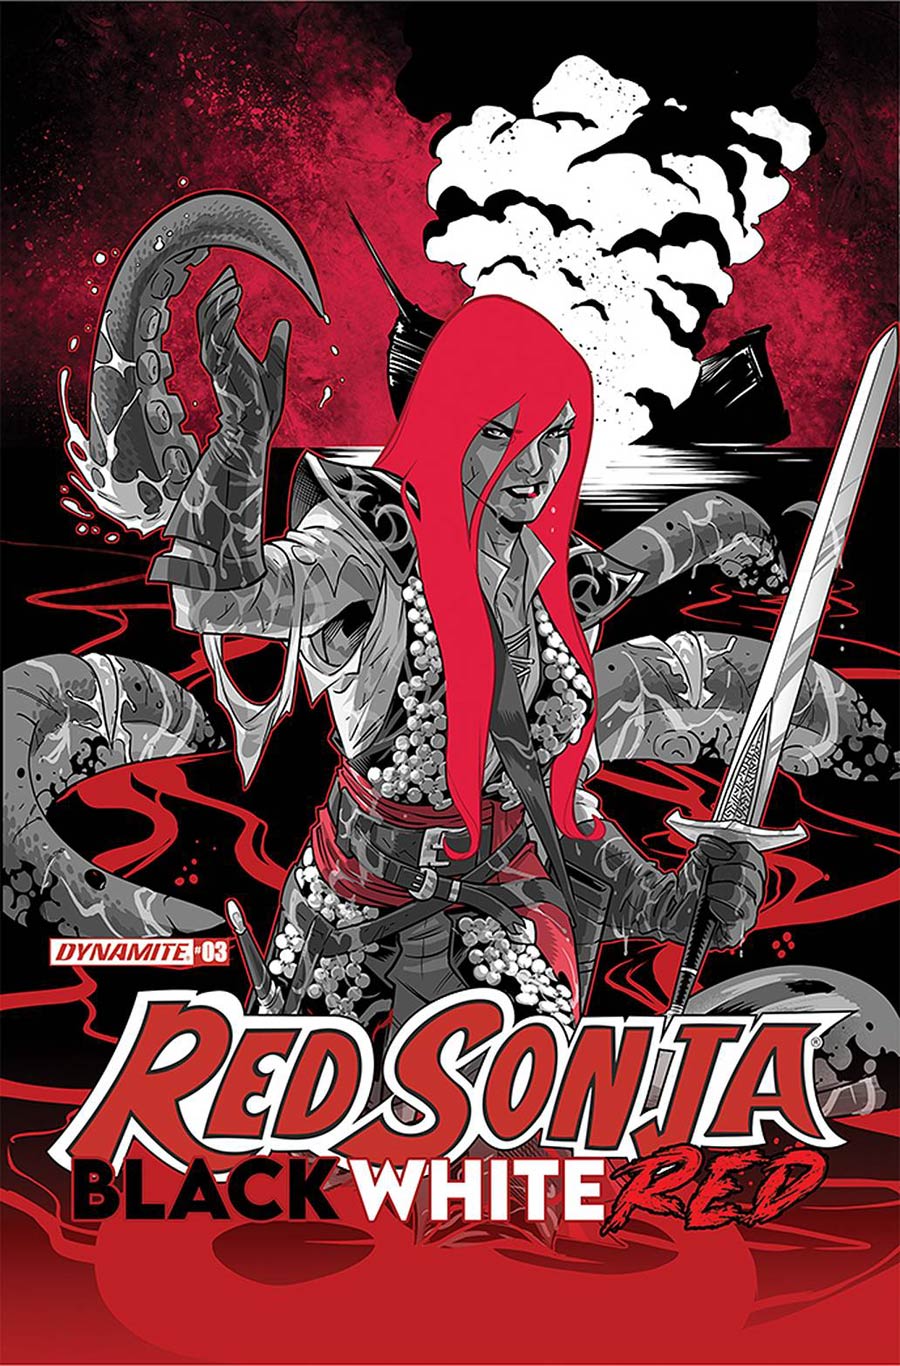 Red Sonja Black White Red #3 Cover B Variant Sean Izaakse Cover